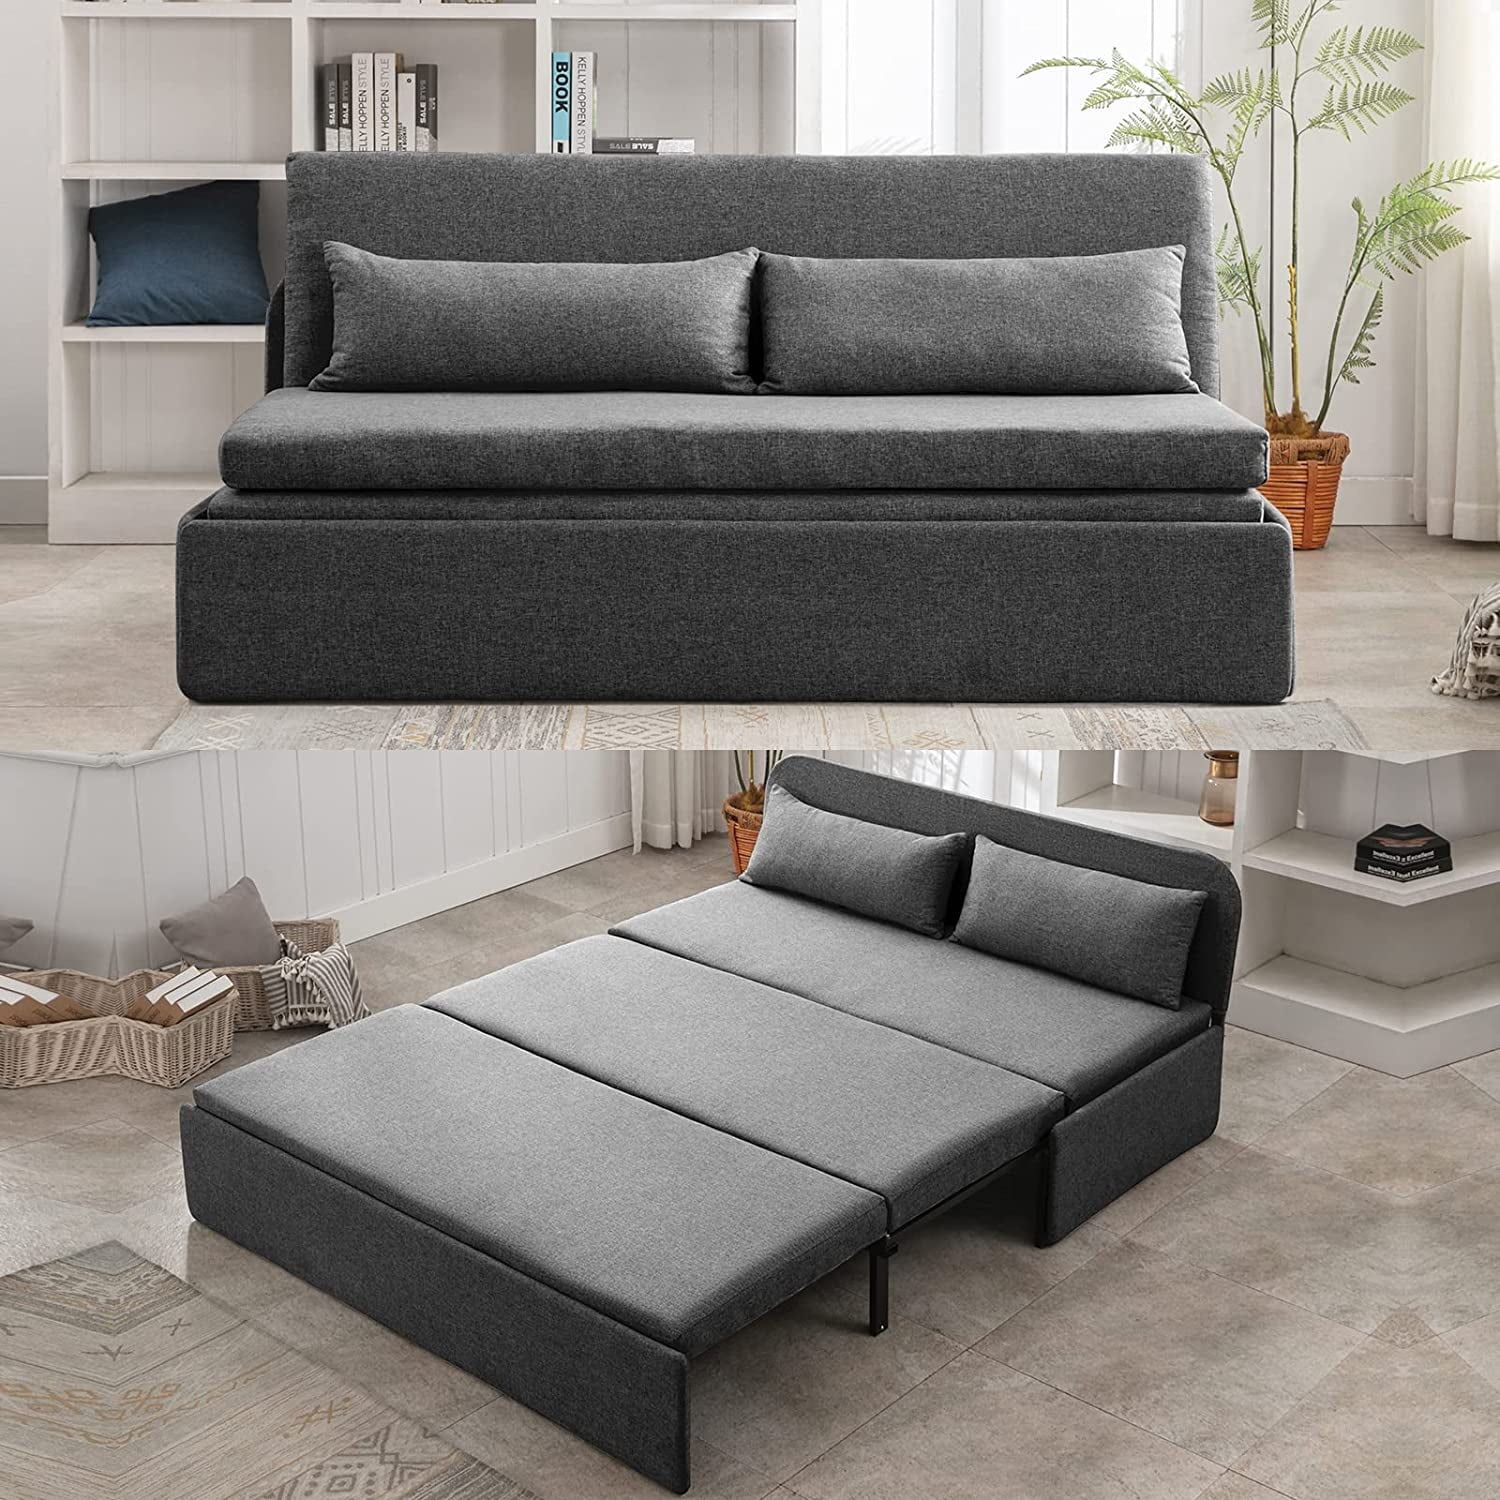 Mjkone Queen Size Convertible Sofa Bed, Modern Pull Out Linen Sleeper Regarding Queen Size Convertible Sofa Beds (View 19 of 20)